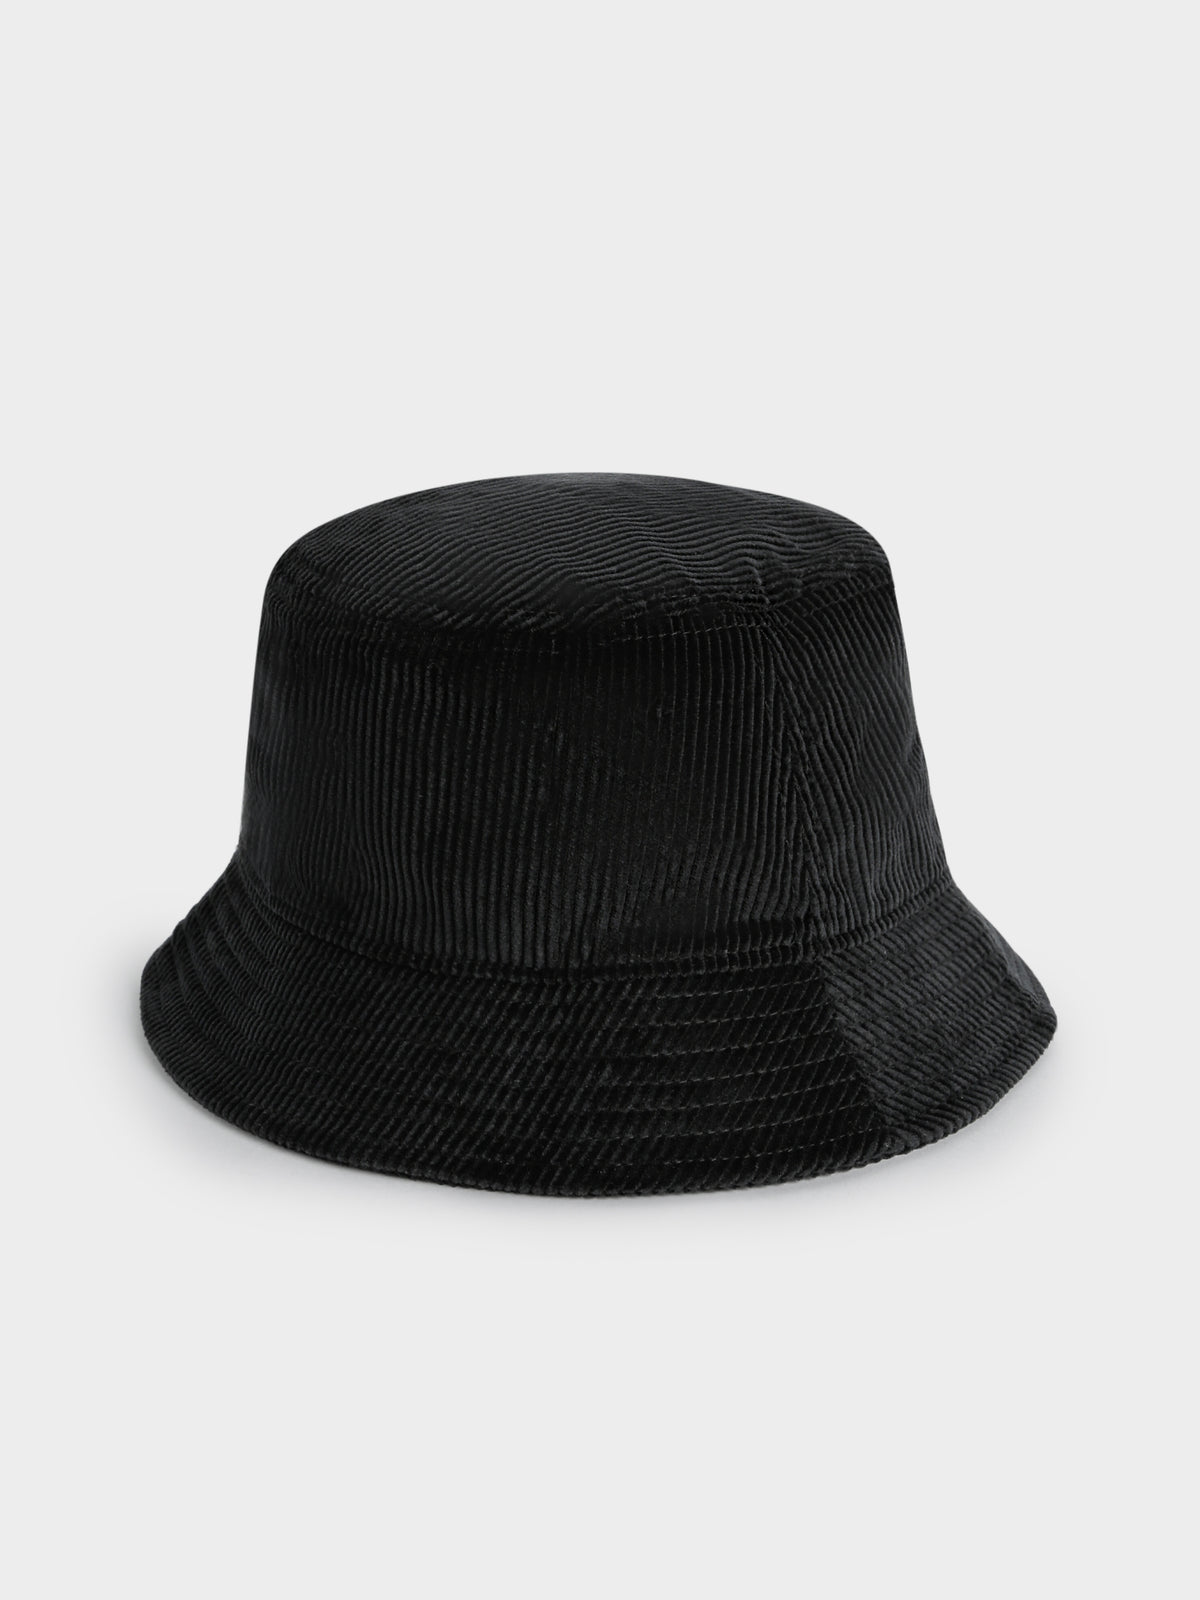 Futura Bucket Hat in Black Corduroy